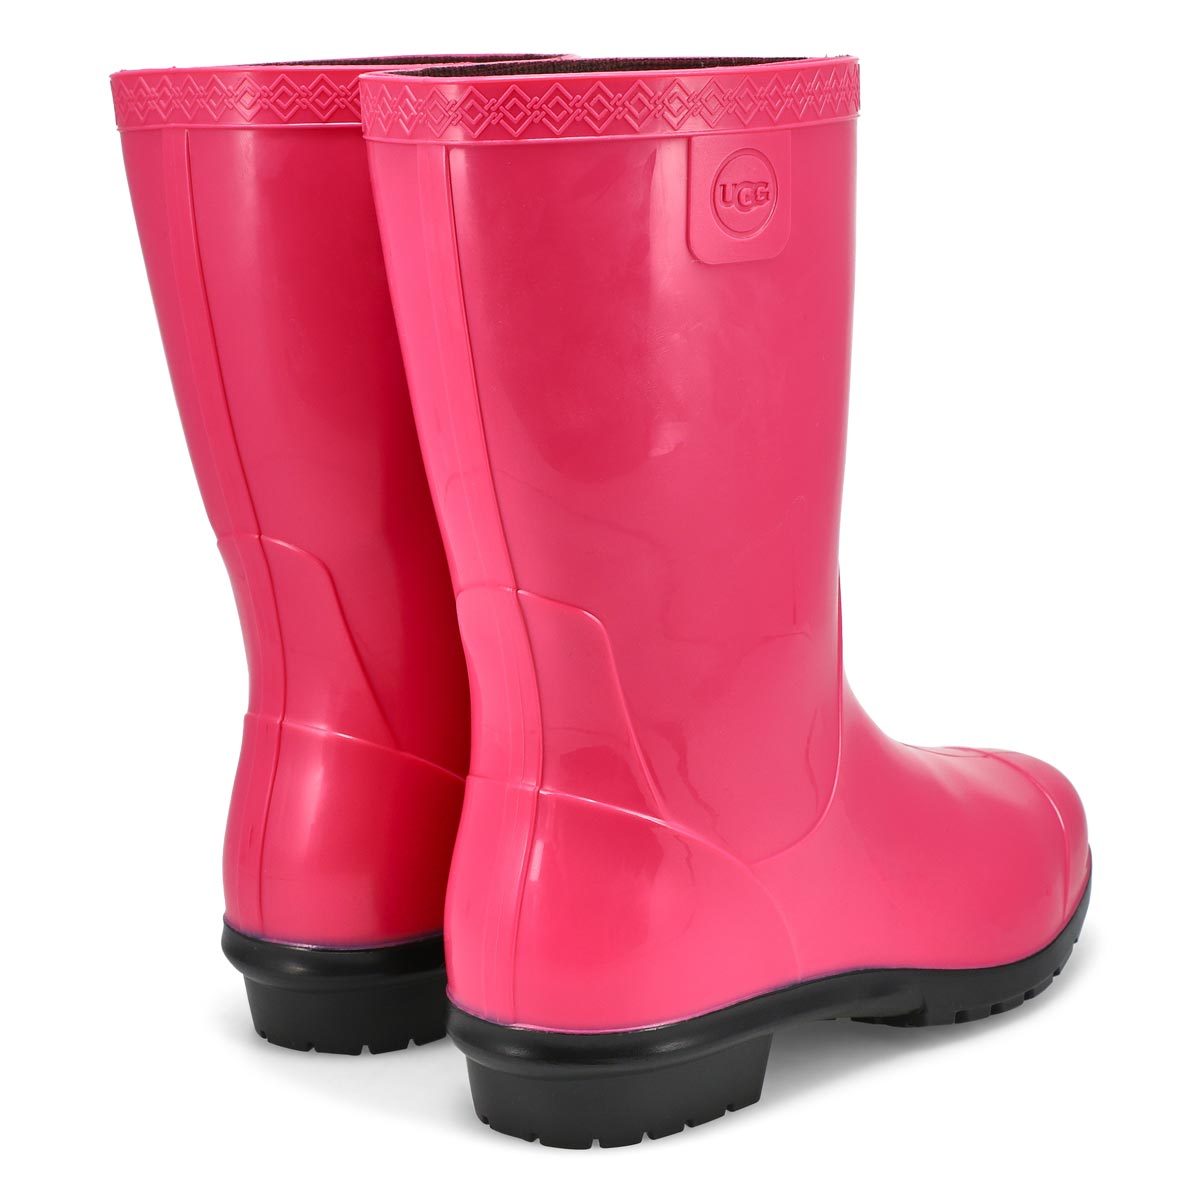 Girls' Raana diva pink waterproof rain boots